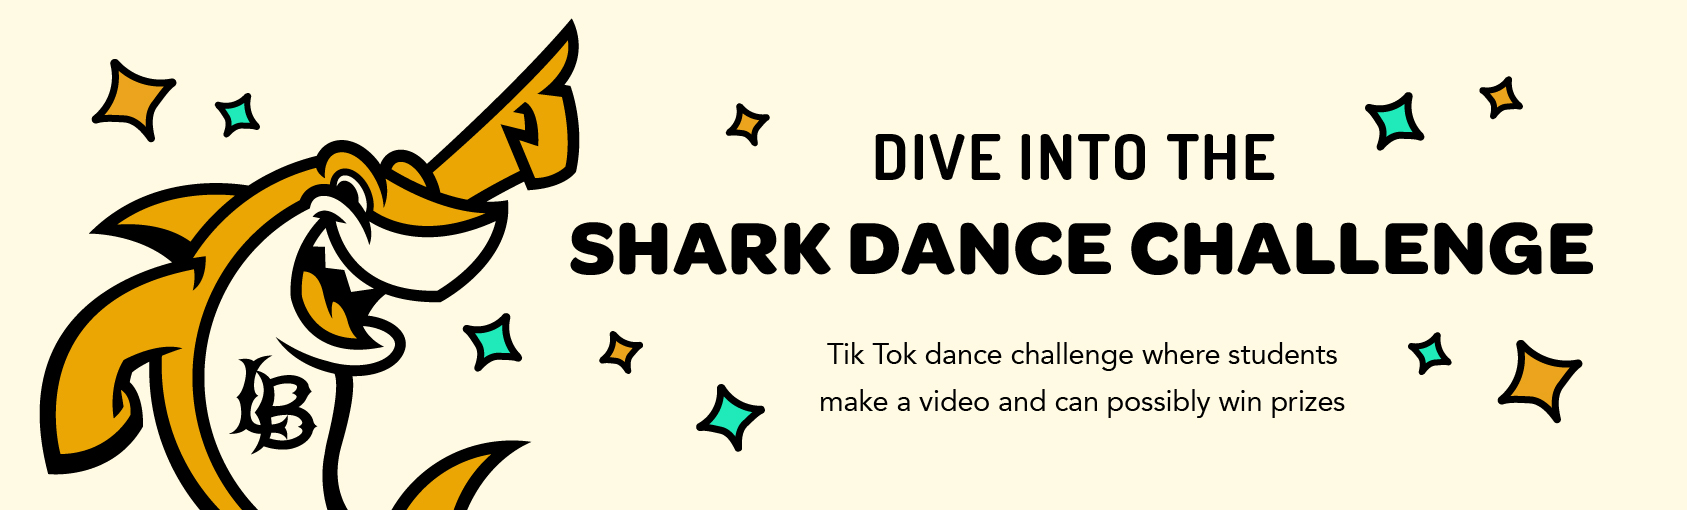 shark dance challenge